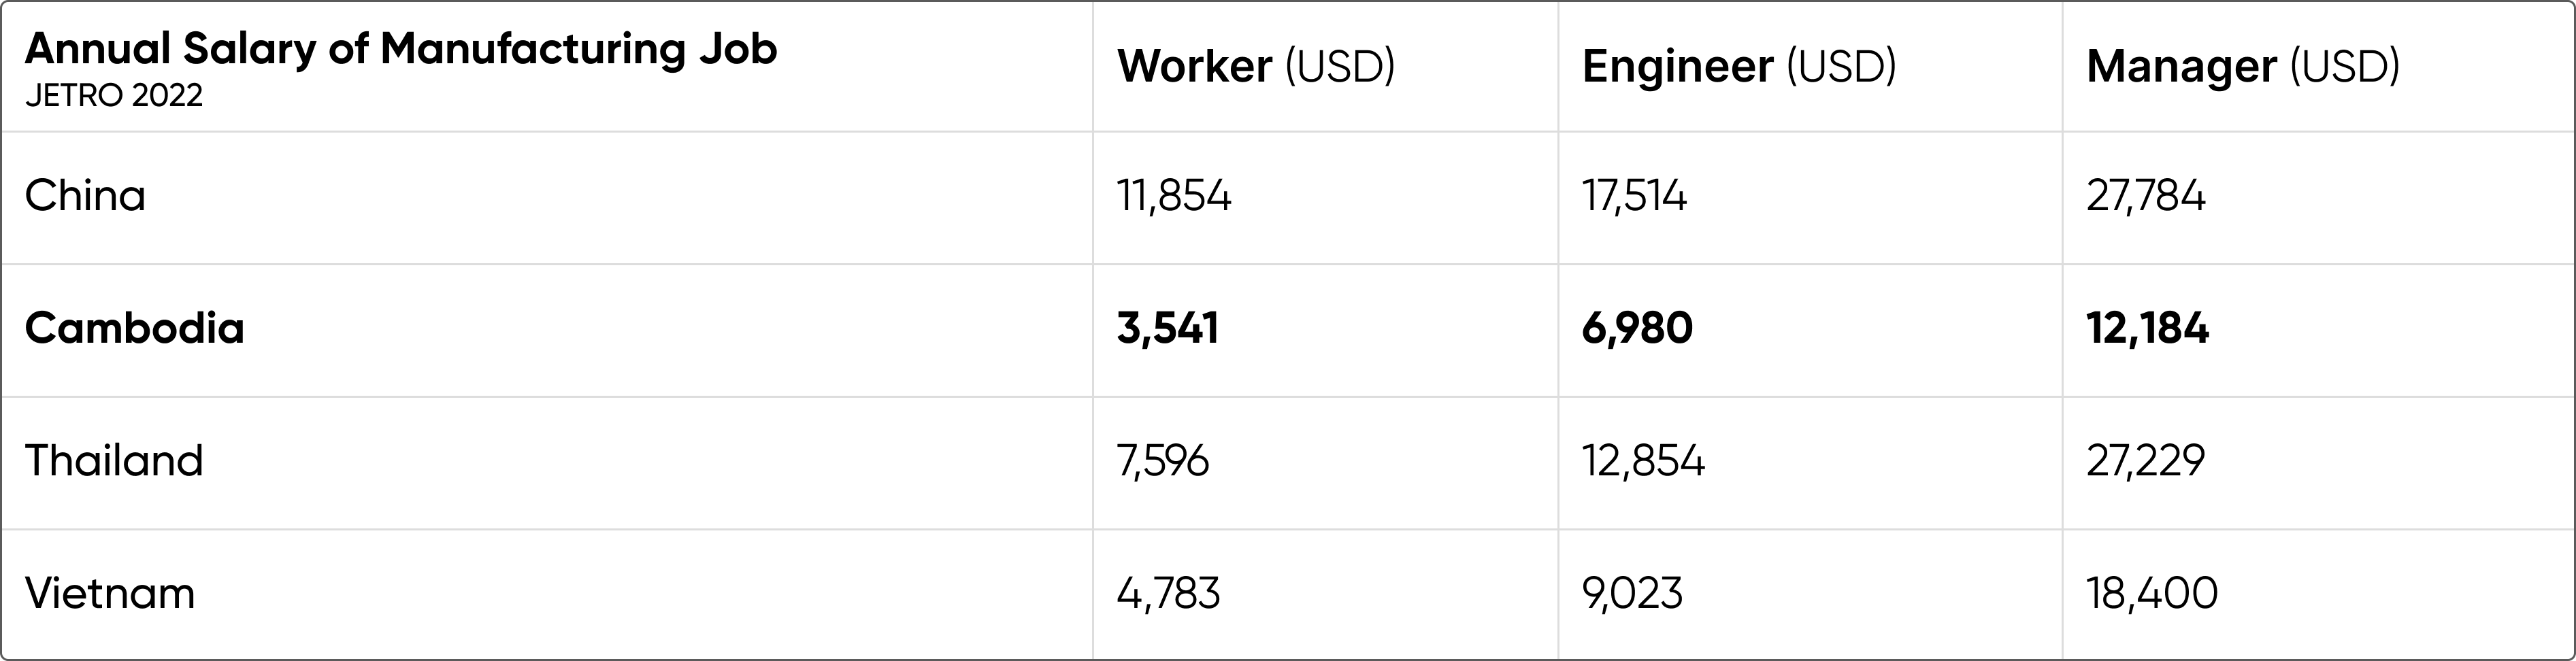 Annual Salary of Manufacturing job, Cambodia, China, Thailand, Vietnam